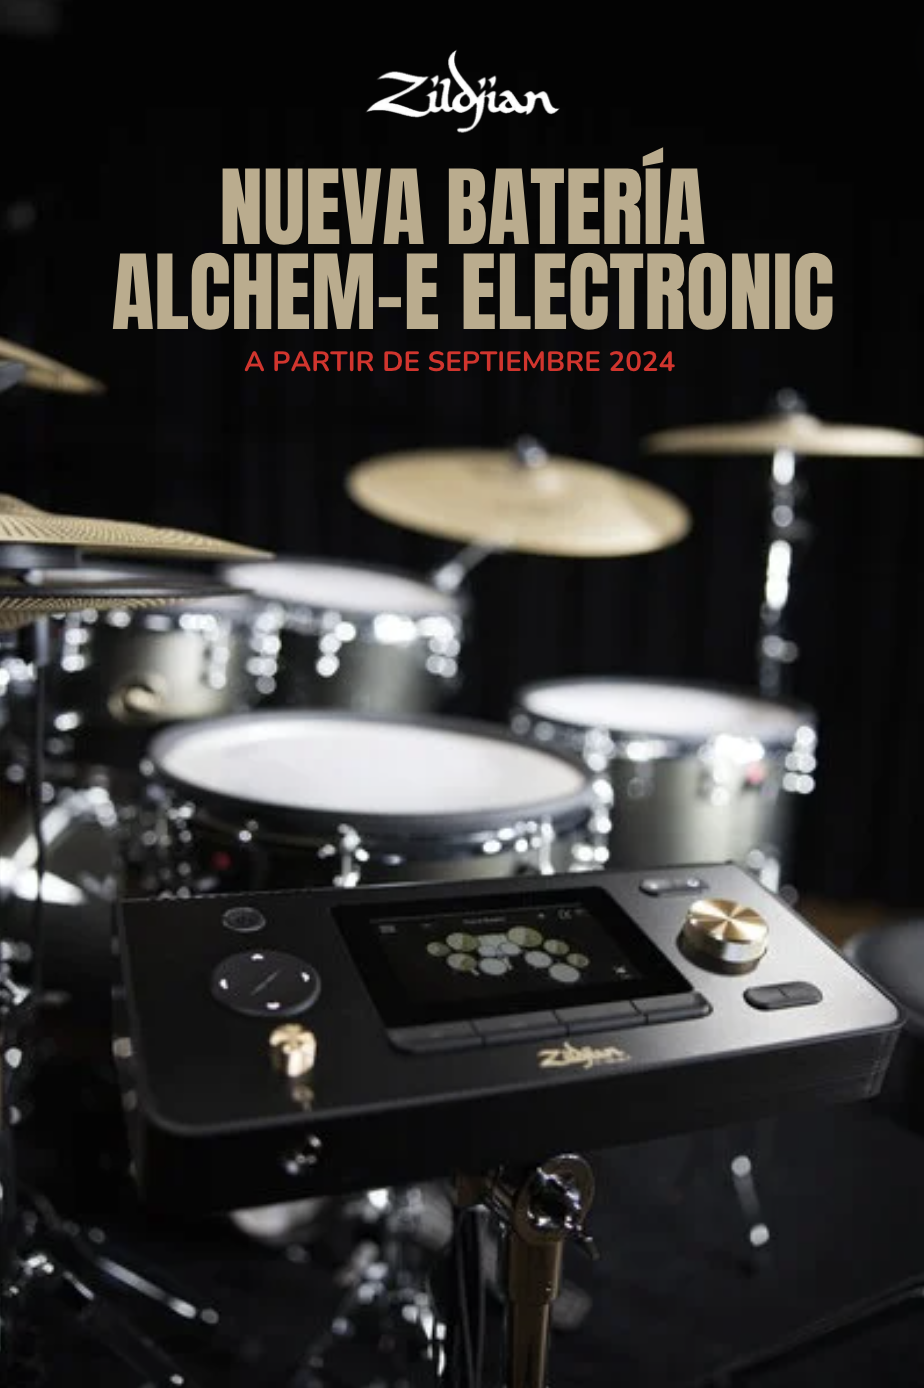 Zildjian ALCHEM-E ELECTRONIC DRUM